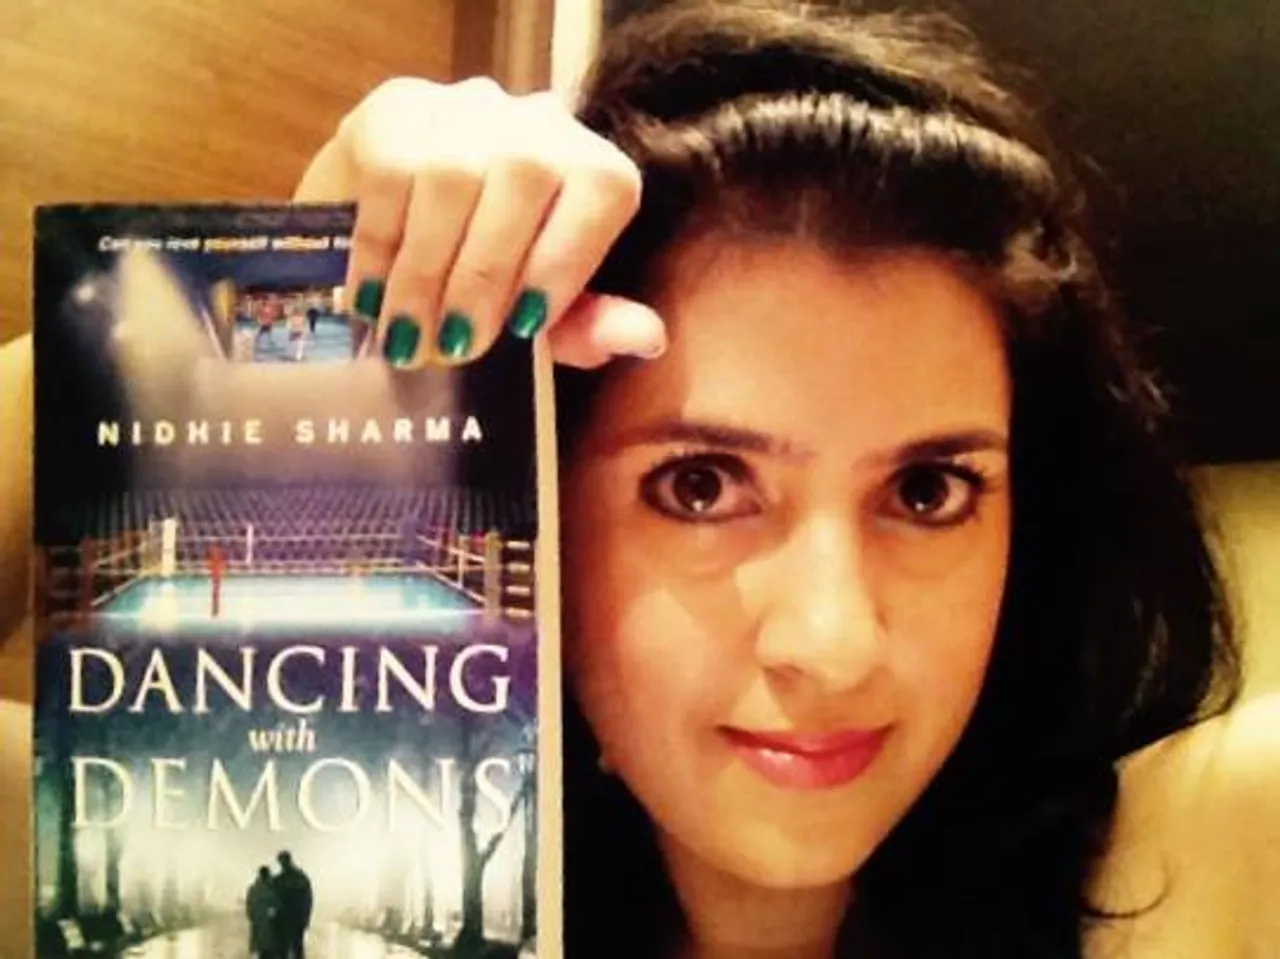 Dancing with the demons: Meet fictional writer Nidhie Sharma